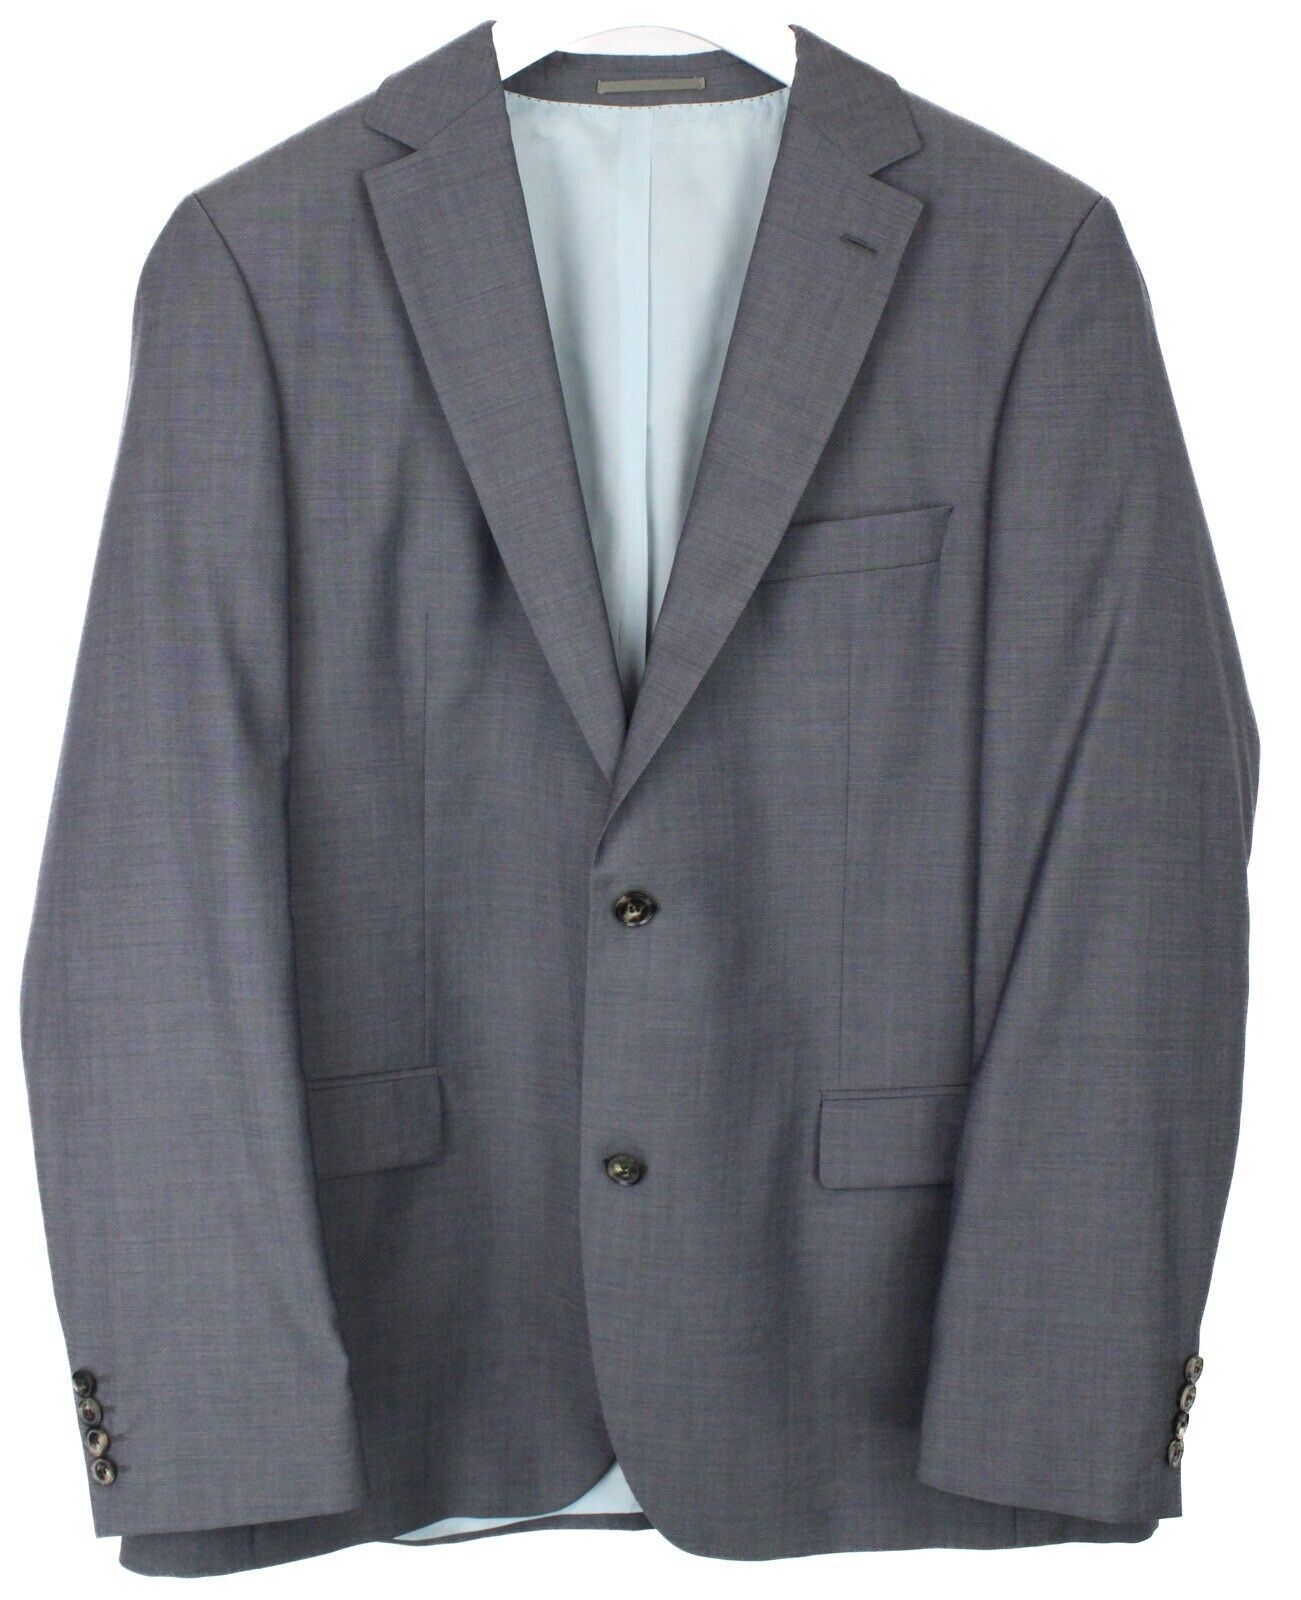 HUGO BOSS Pasolini/Movie Suit Men's US 42L Wool Notch Lapel Grey | eBay